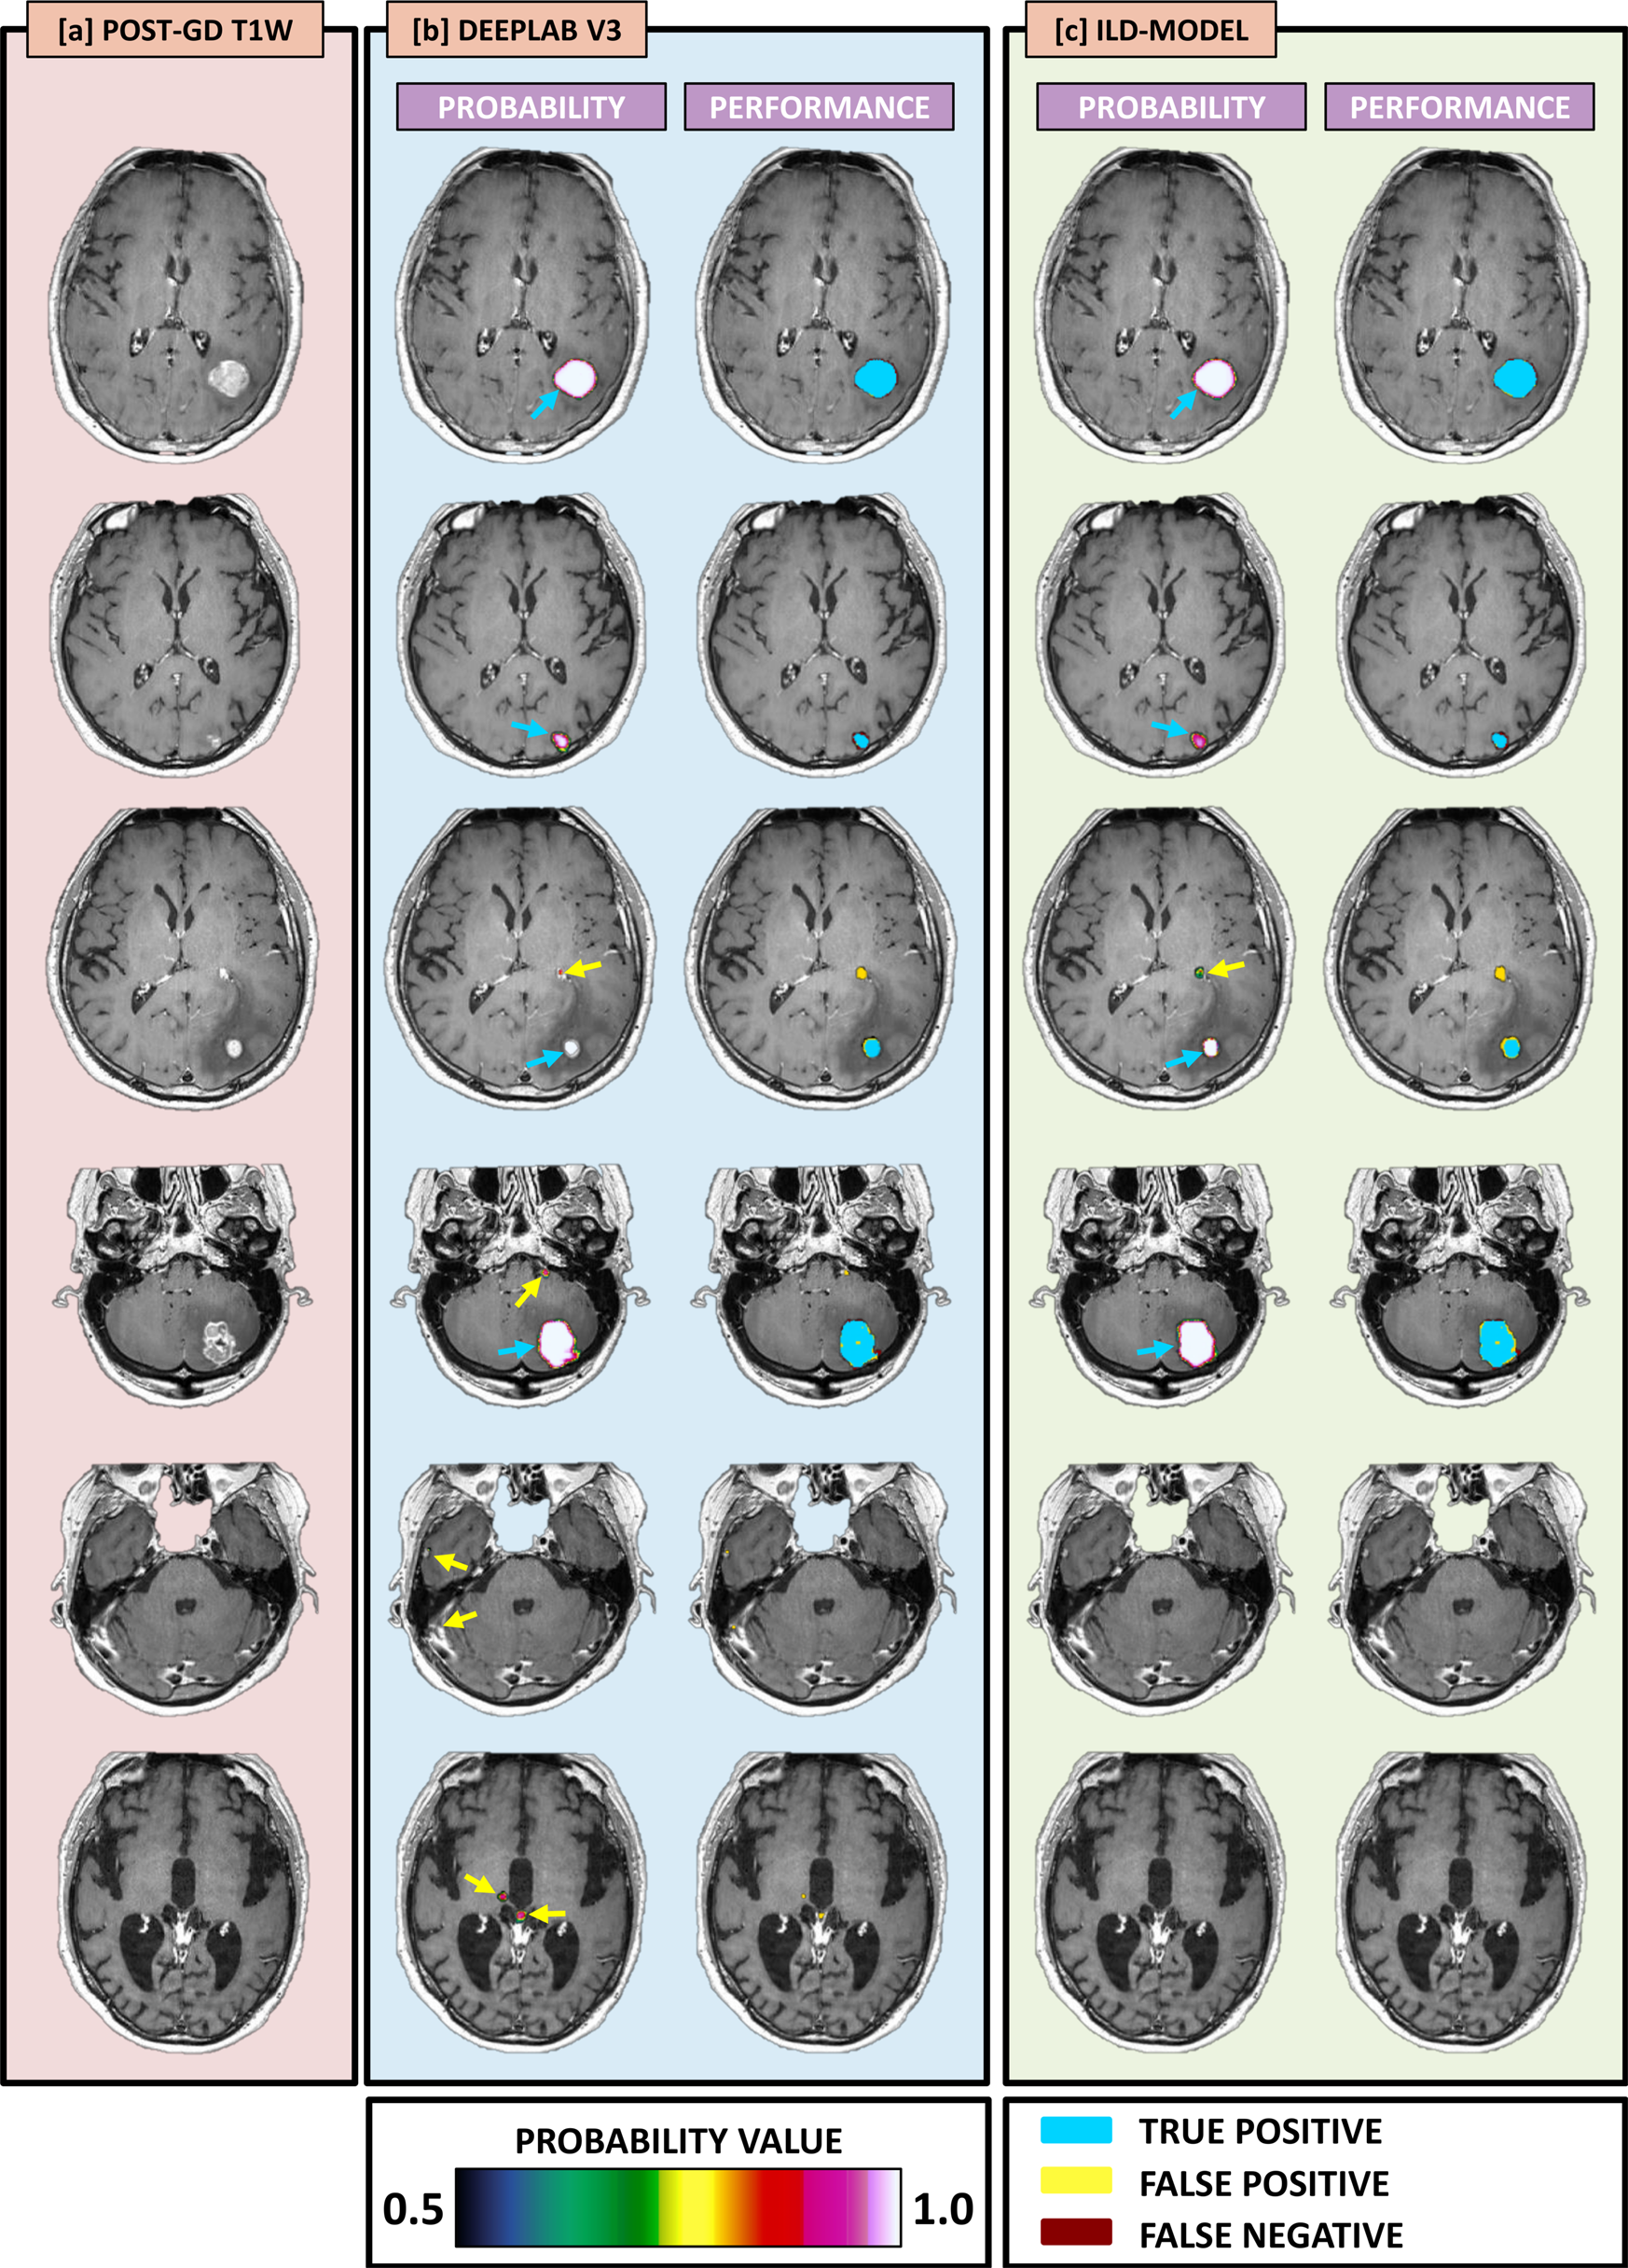 Handling Missing Mri Sequences In Deep Learning Segmentation Of Brain Metastases A Multicenter Study Npj Digital Medicine